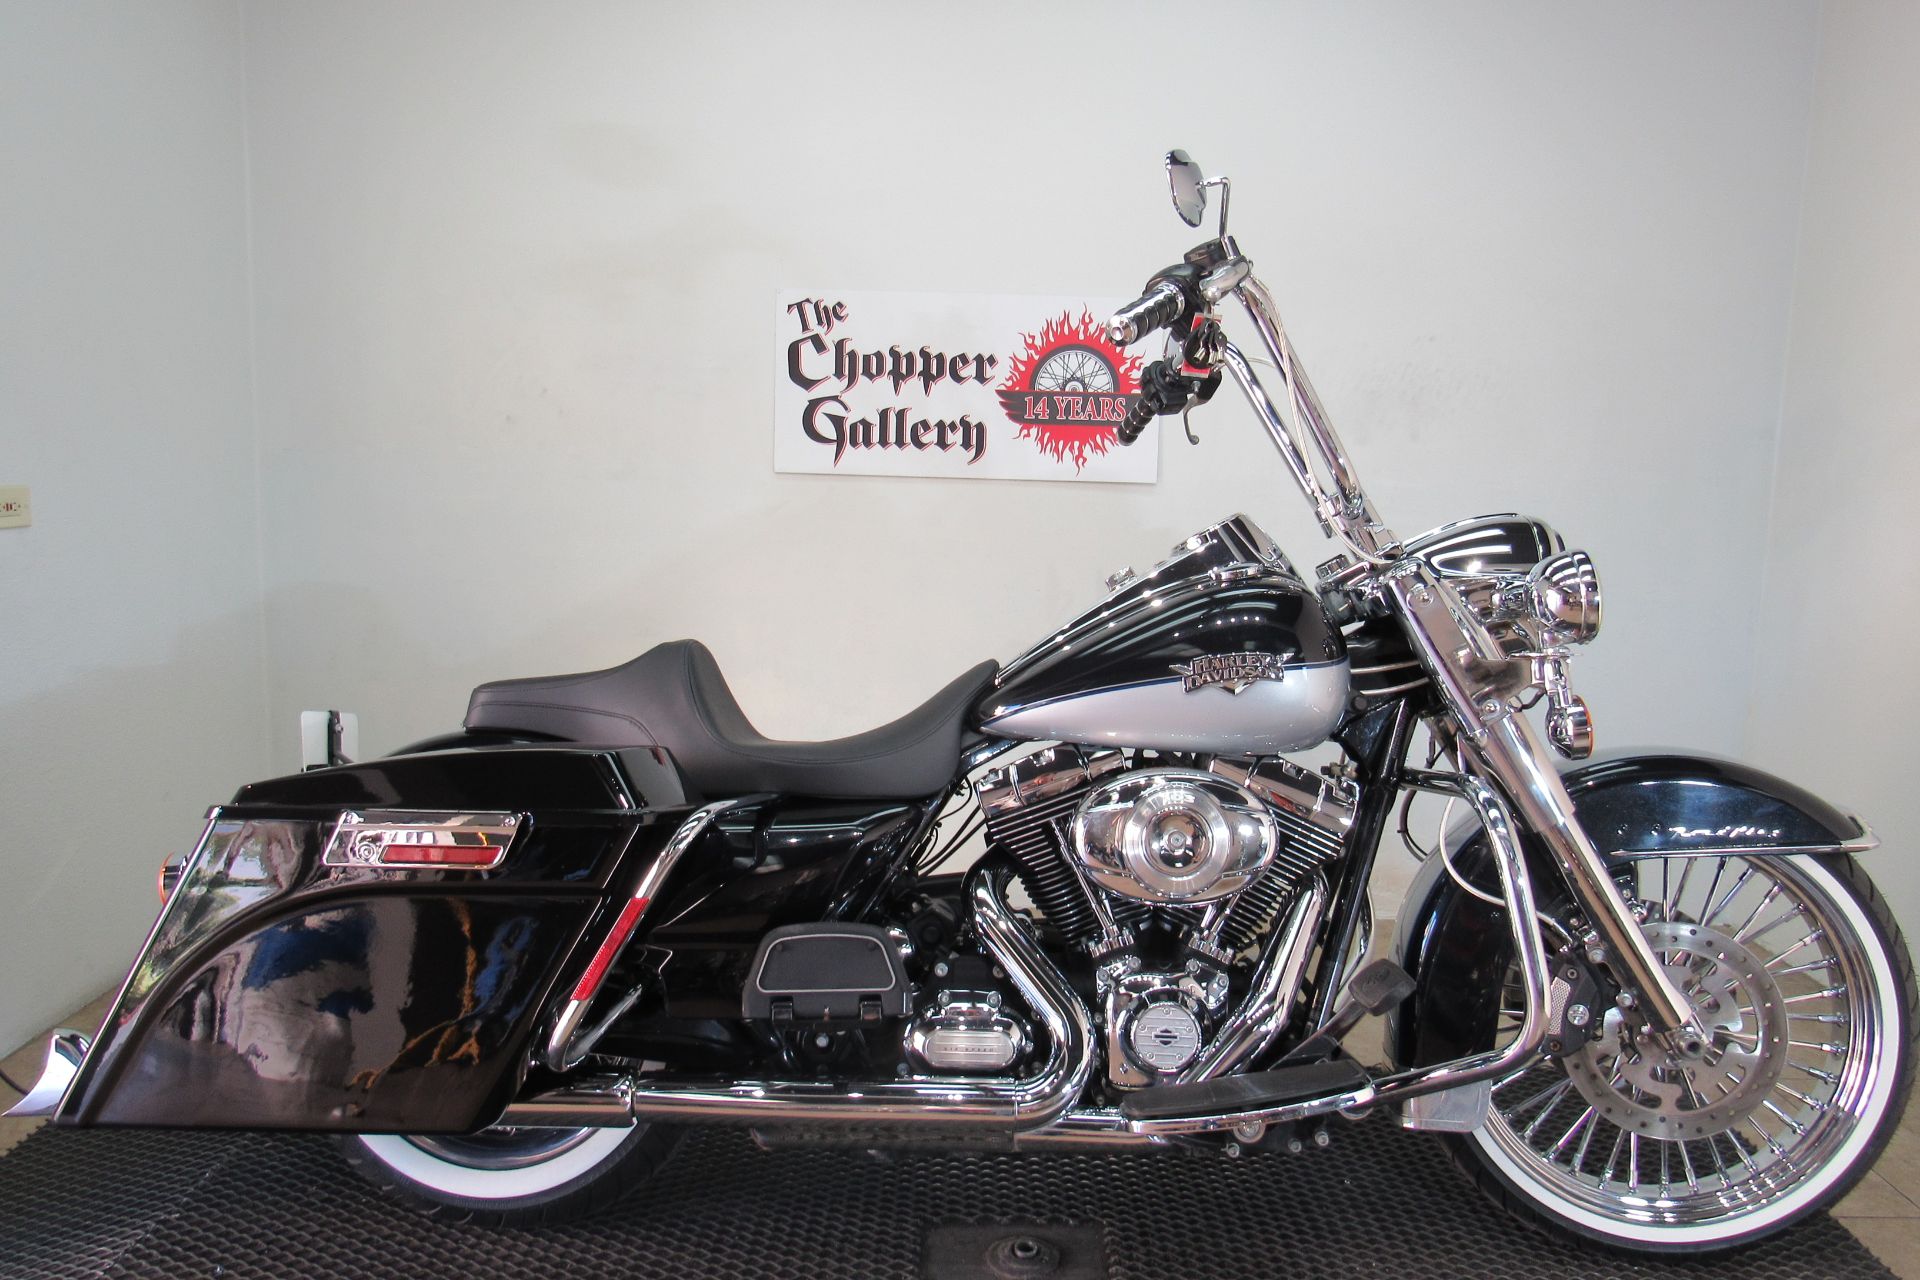 2012 Harley-Davidson Road King® Classic in Temecula, California - Photo 1